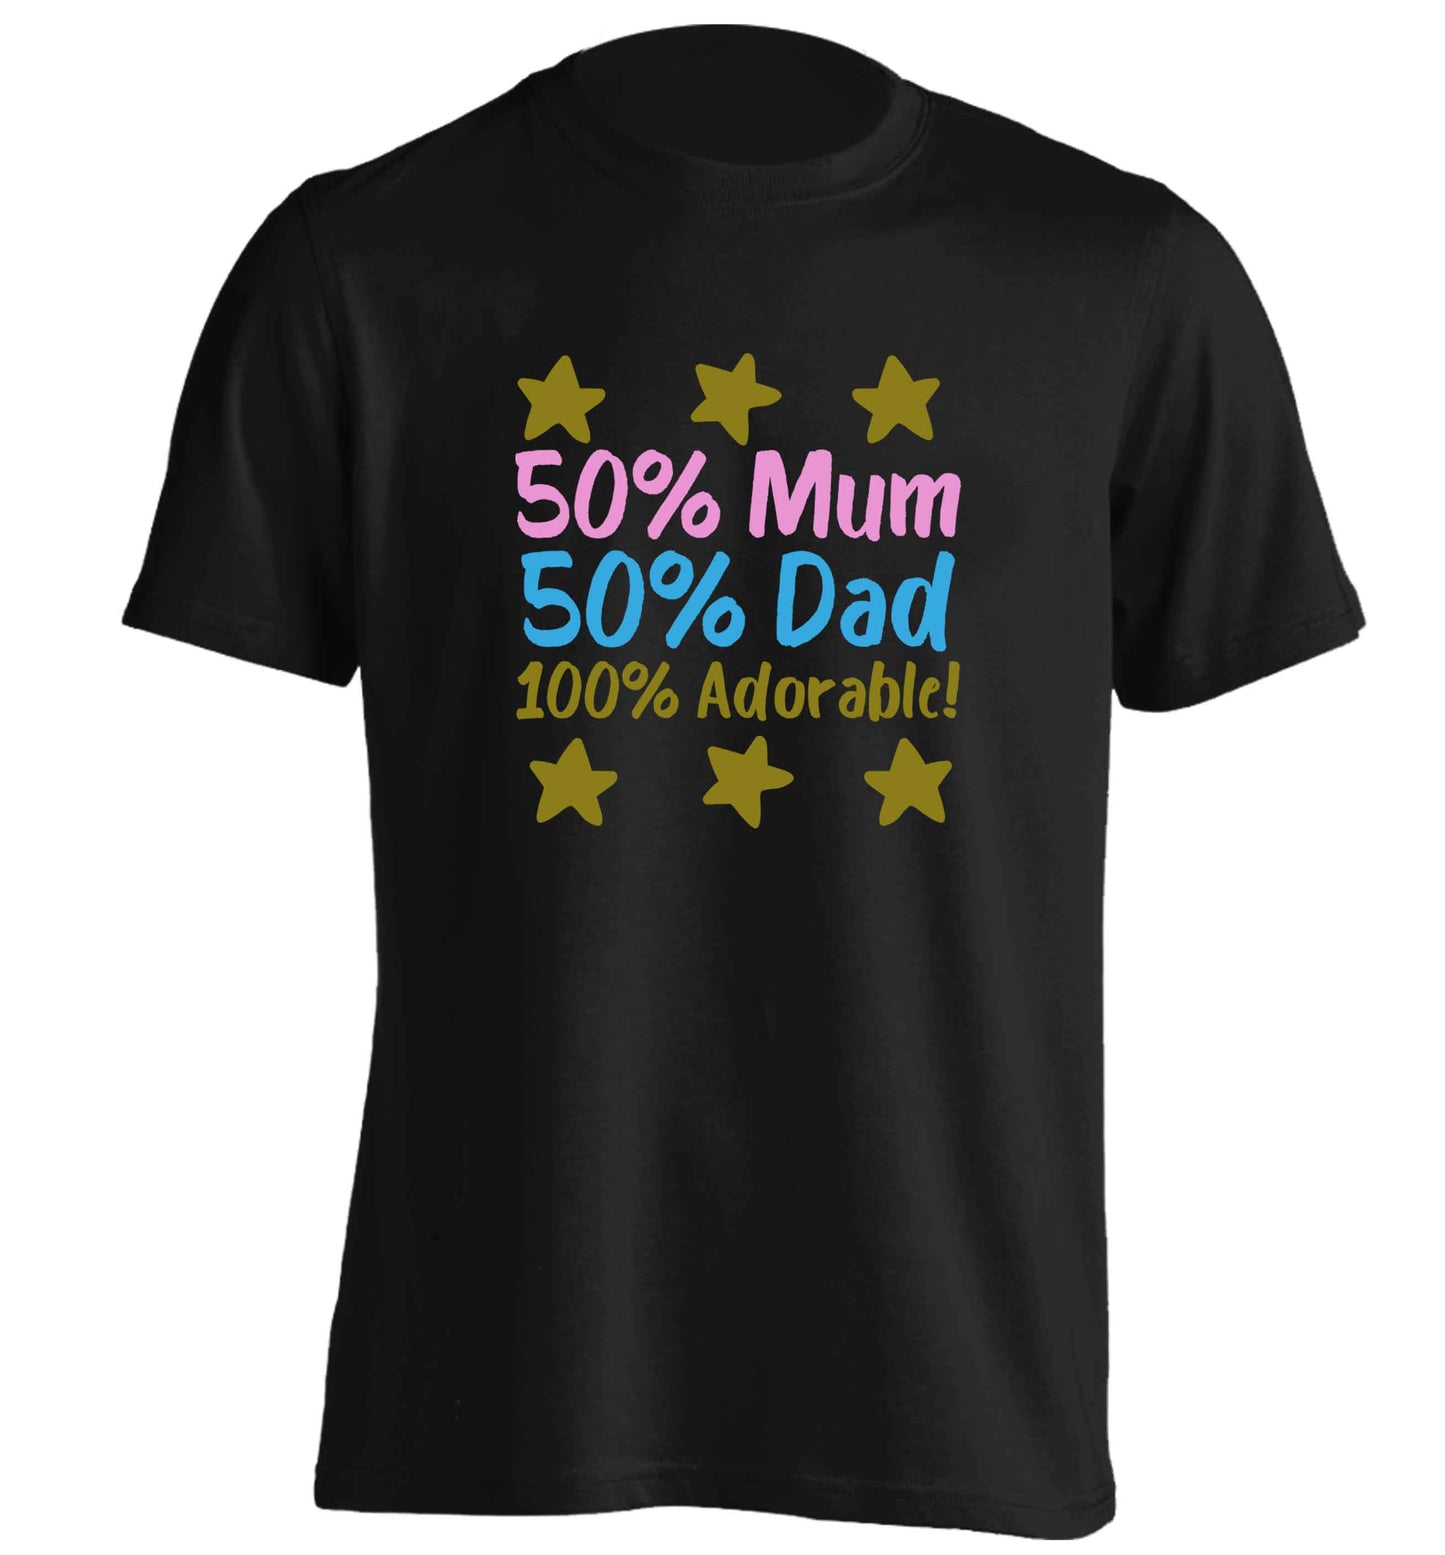 50% mum 50% dad 100% adorable adults unisex black Tshirt 2XL